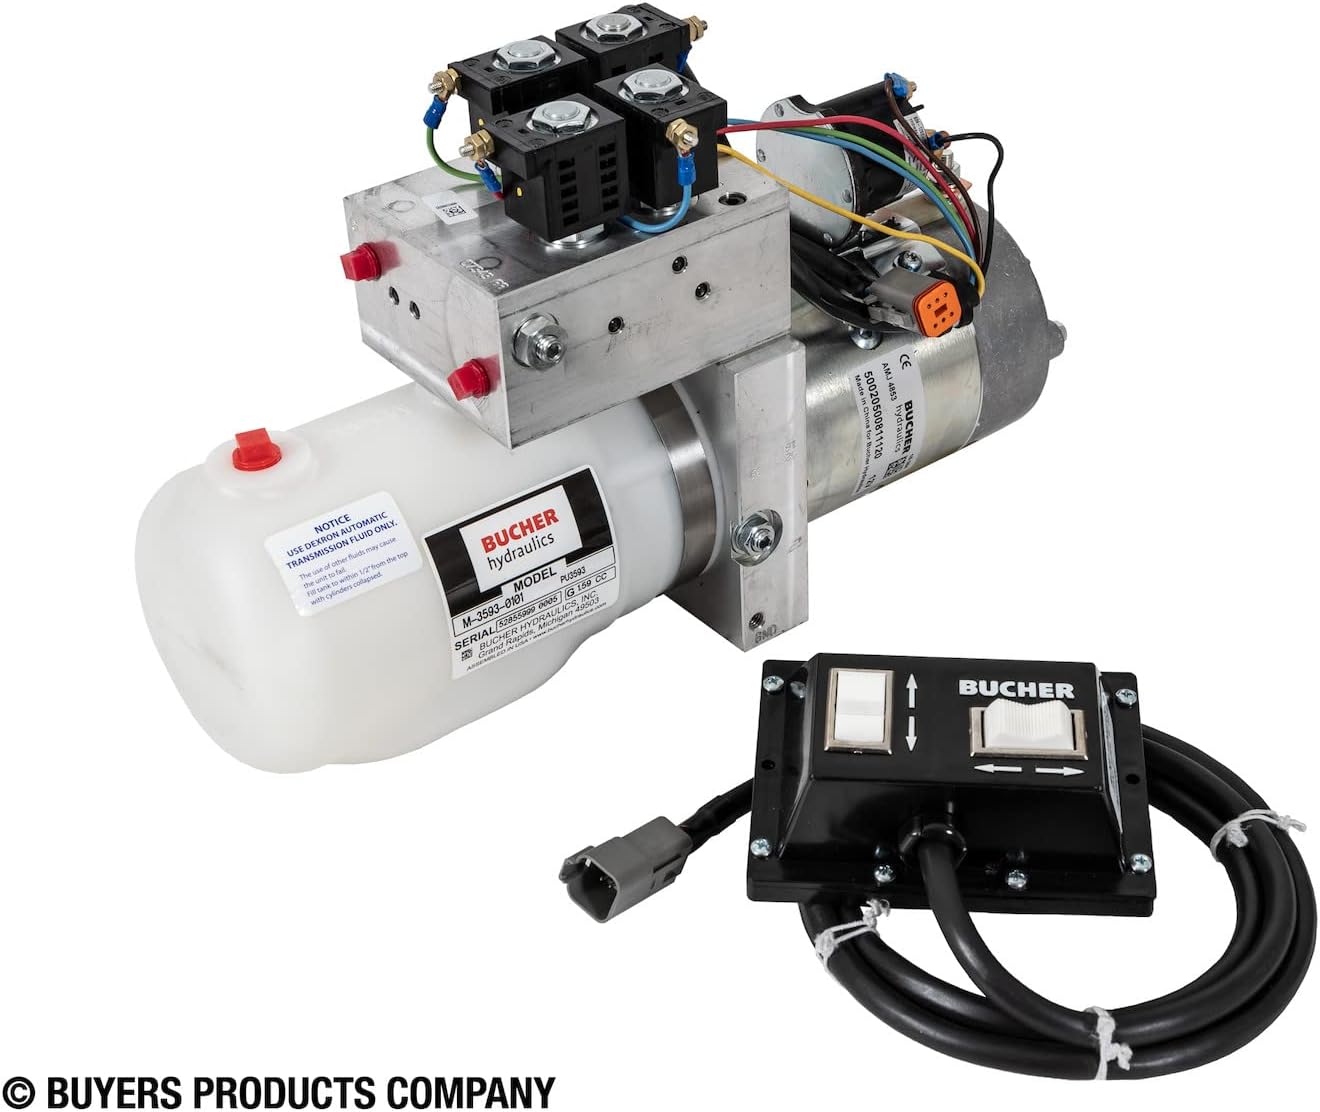 Buyers PU3593 Hydraulic 4-Way/3-Way Valve 12 Volt DC Plow Power Unit - 1.3 Quart Reservoir